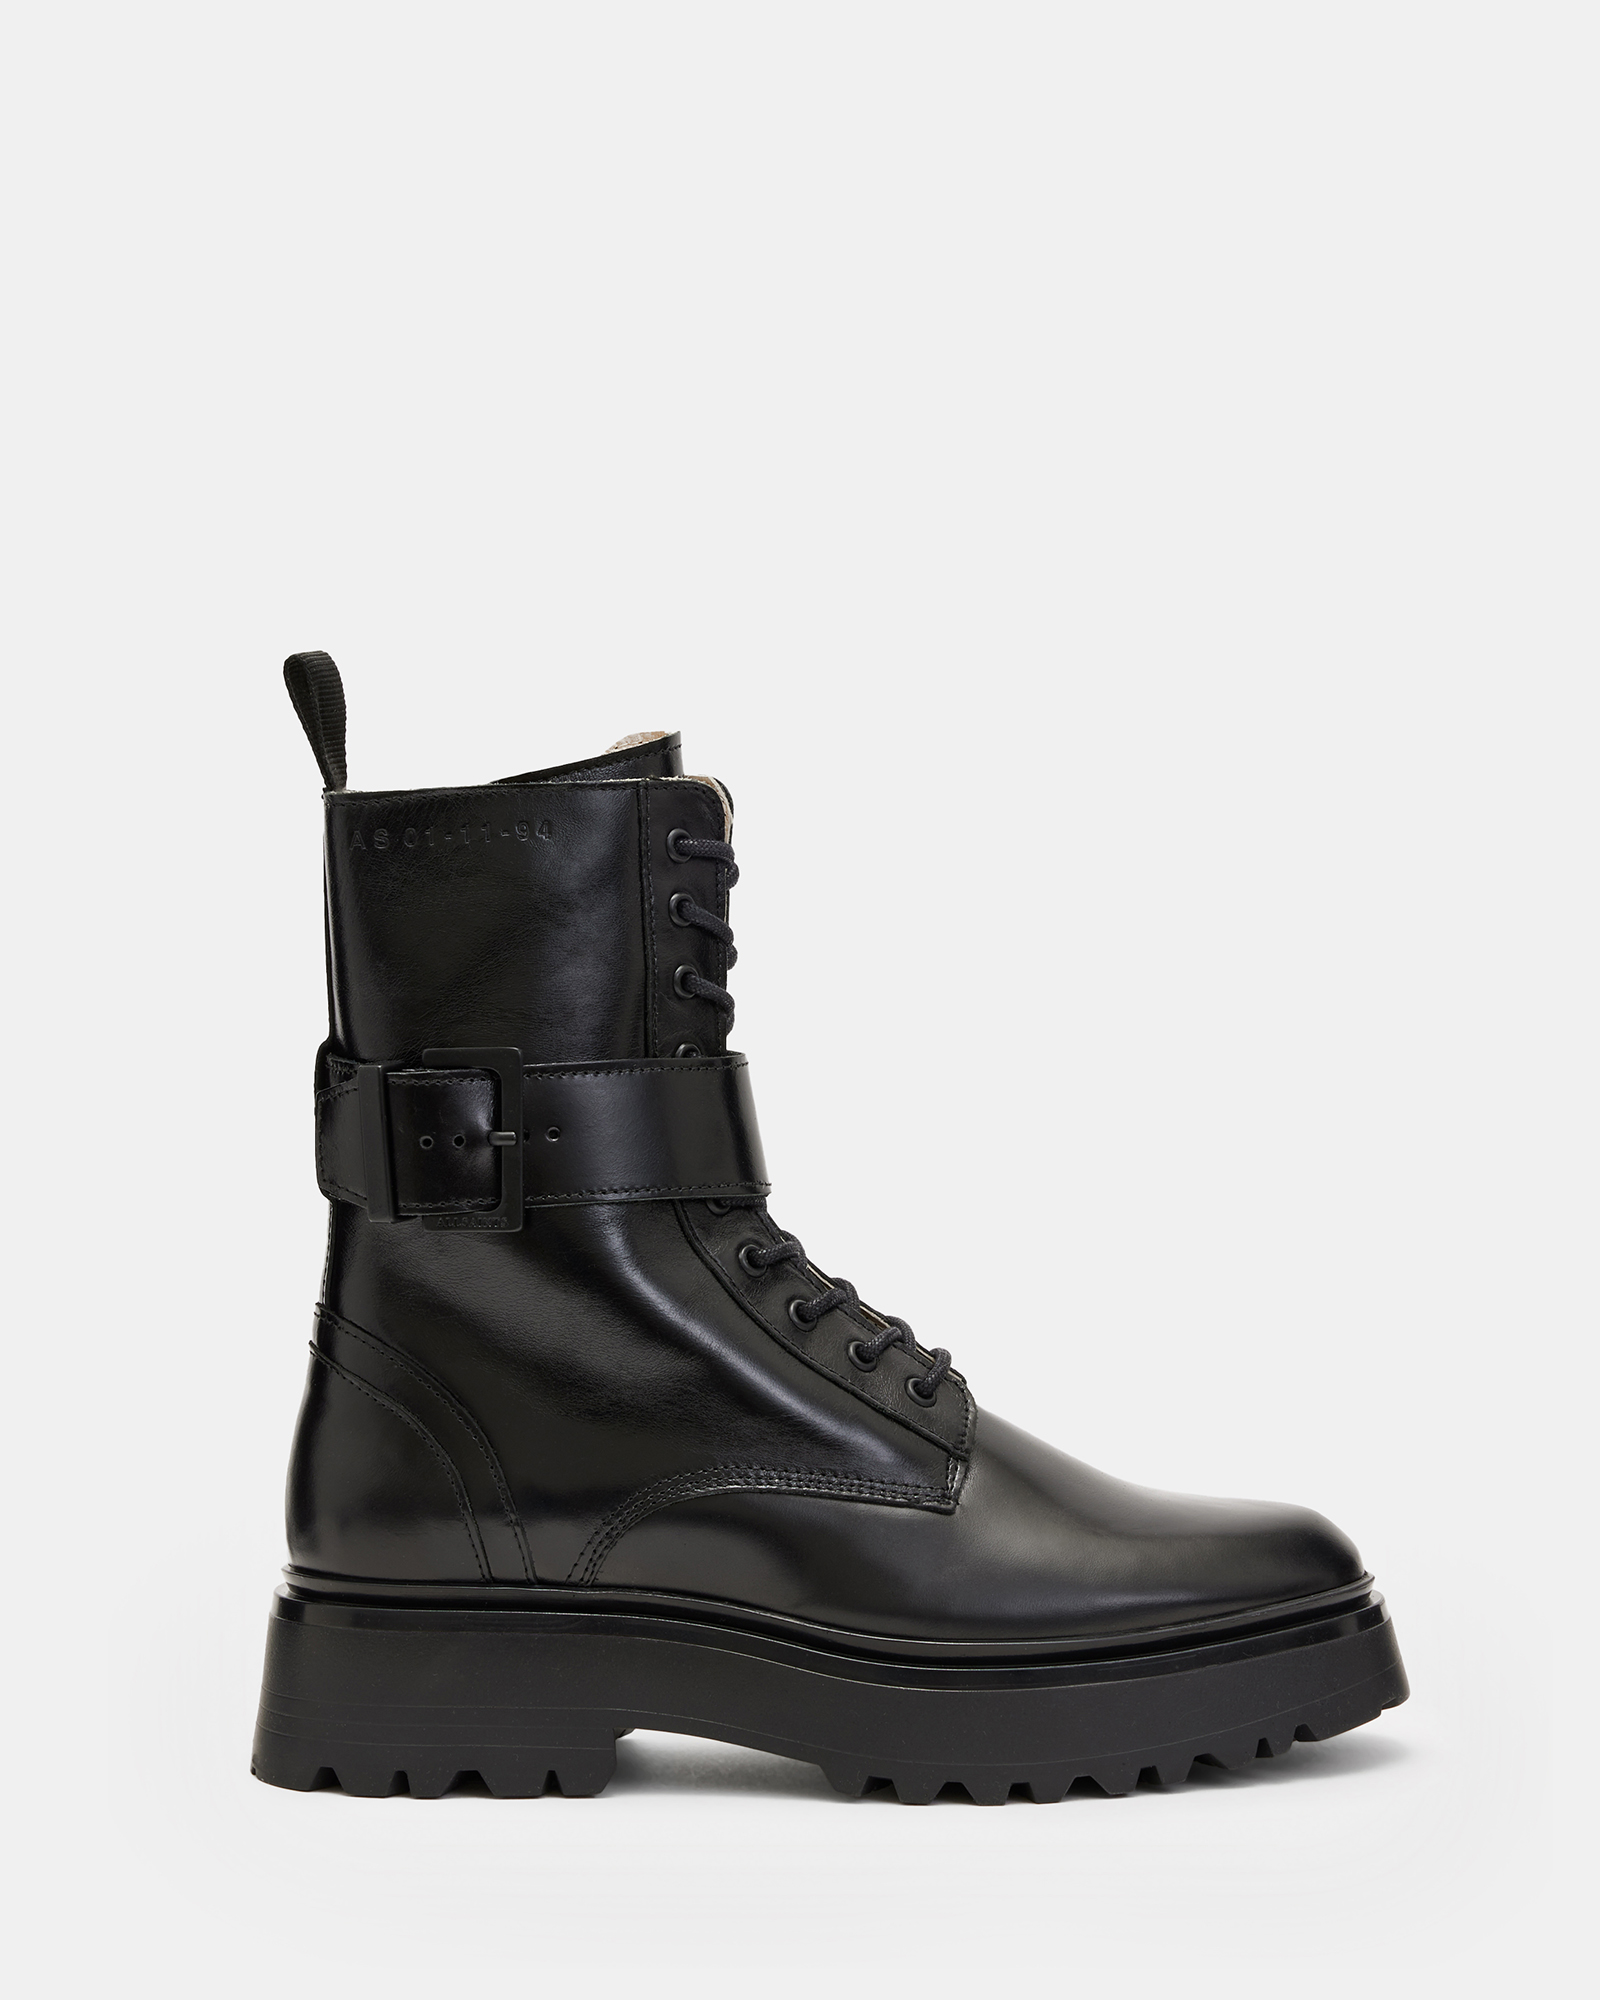 AllSaints Onyx Leather Boots